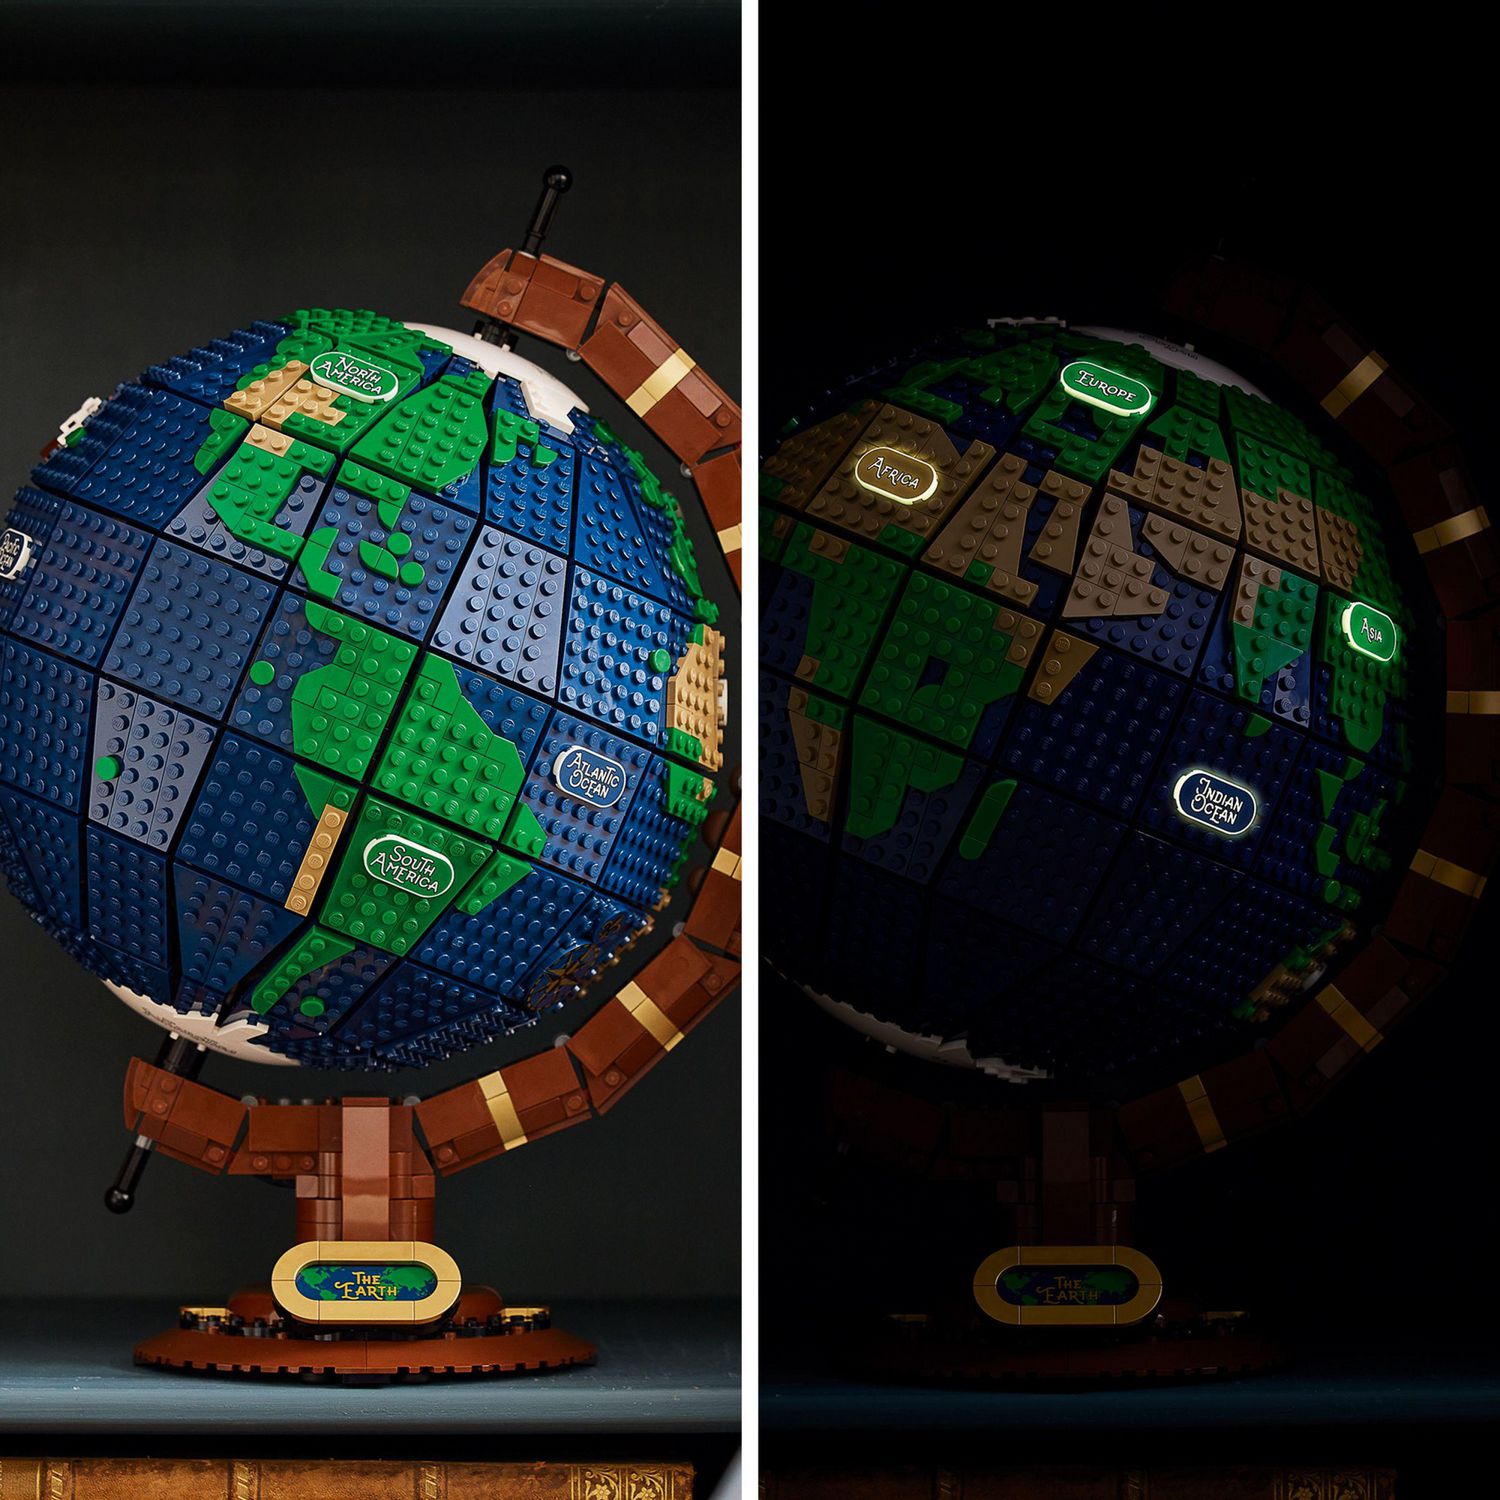 Un Vitryat conçoit un globe terrestre en Lego: la marque va le  commercialiser